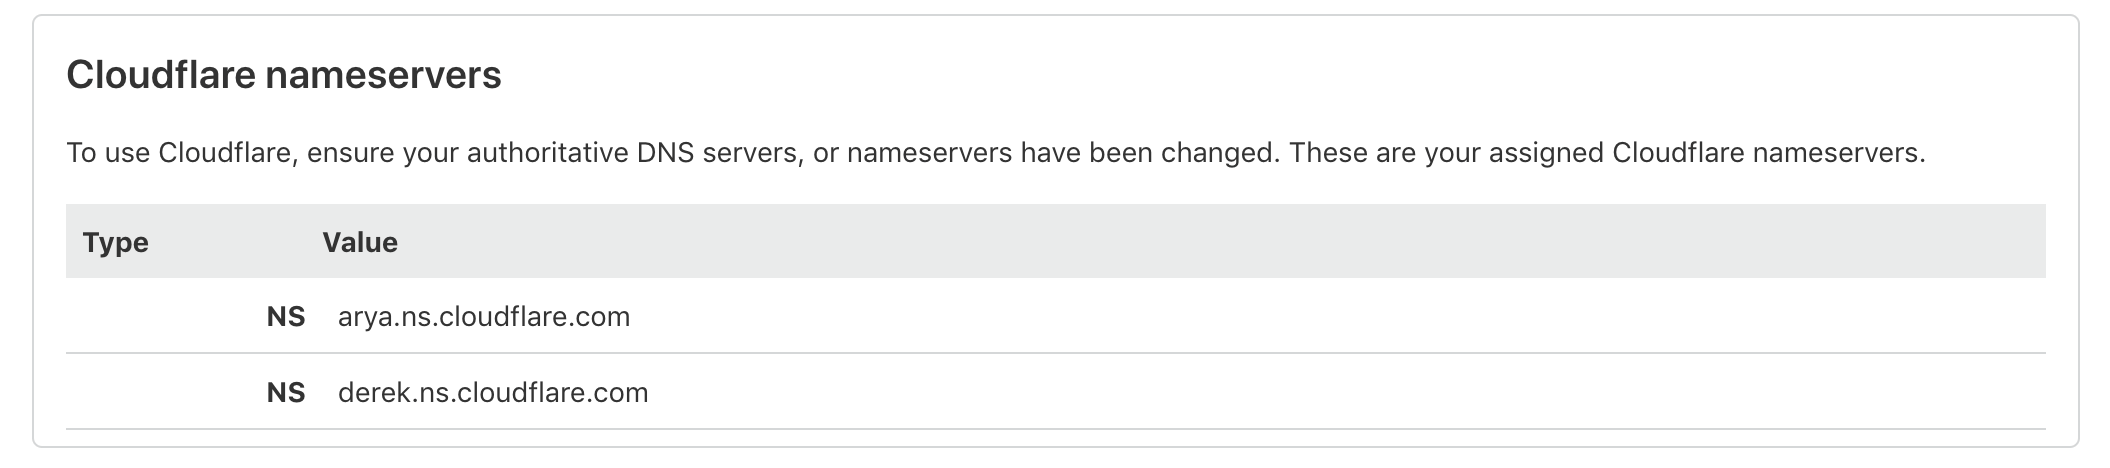 Cloudflare-nameservers